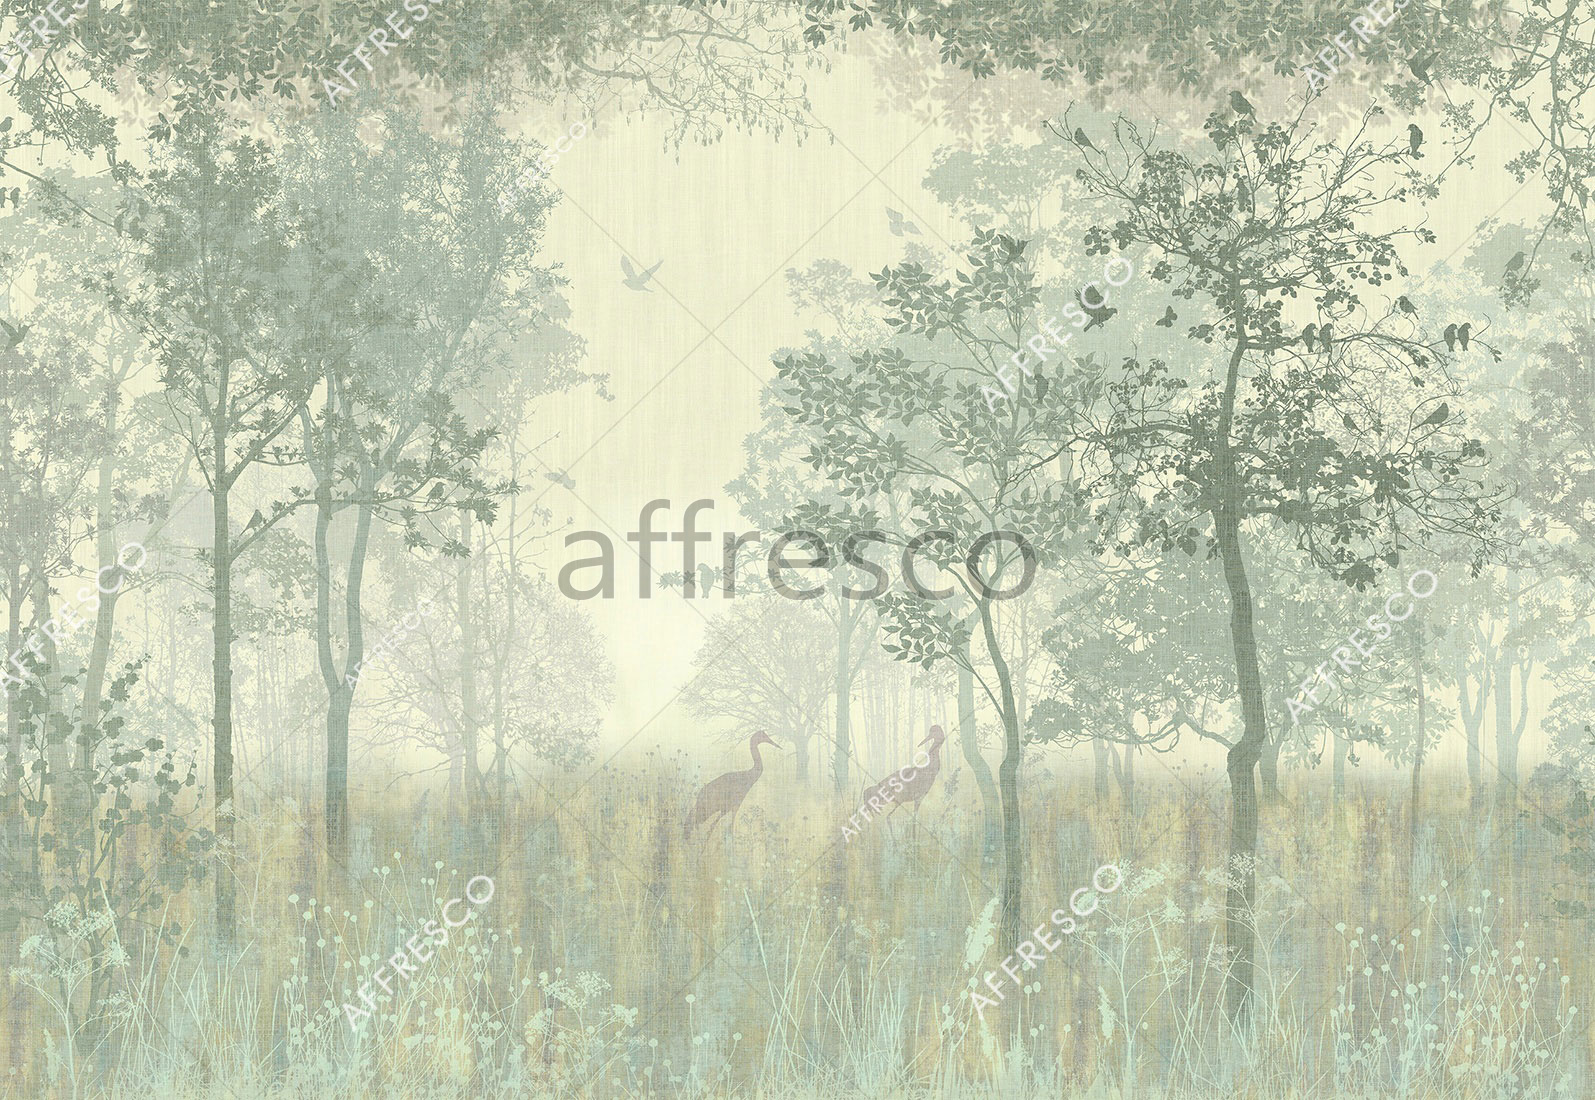 ID135980 | Forest |  | Affresco Factory